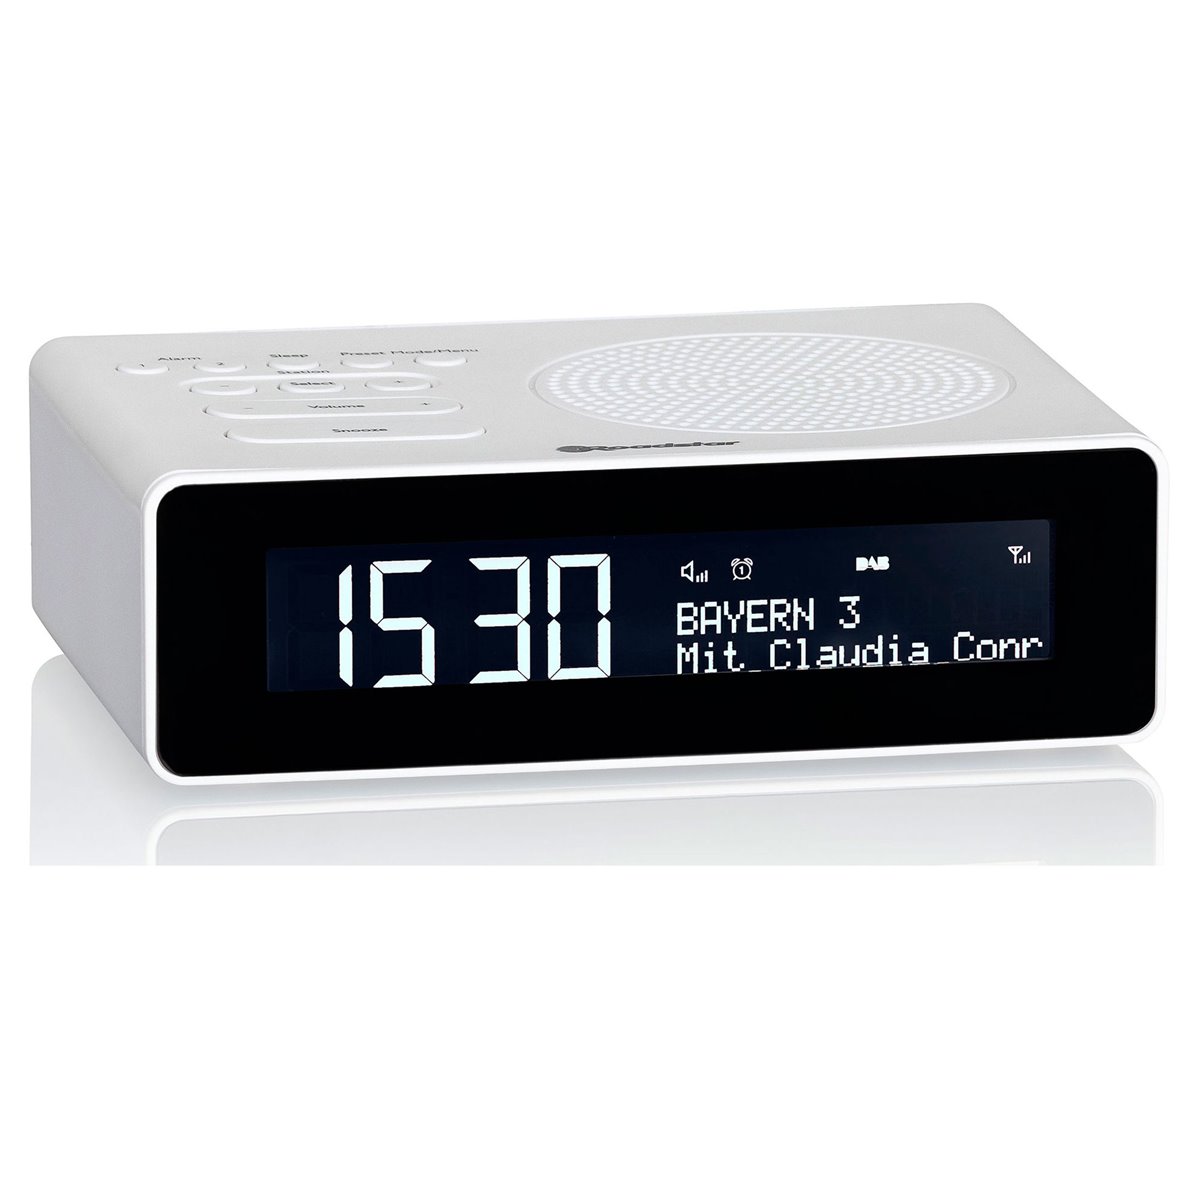 Roadstar CLR-290D+/WH Radio Reloj Despertador Digital DAB/DAB+/FM, 2  Alarmas, Gran Pantalla LCD, Snooze, Temporizador, , Blanco - Conforama